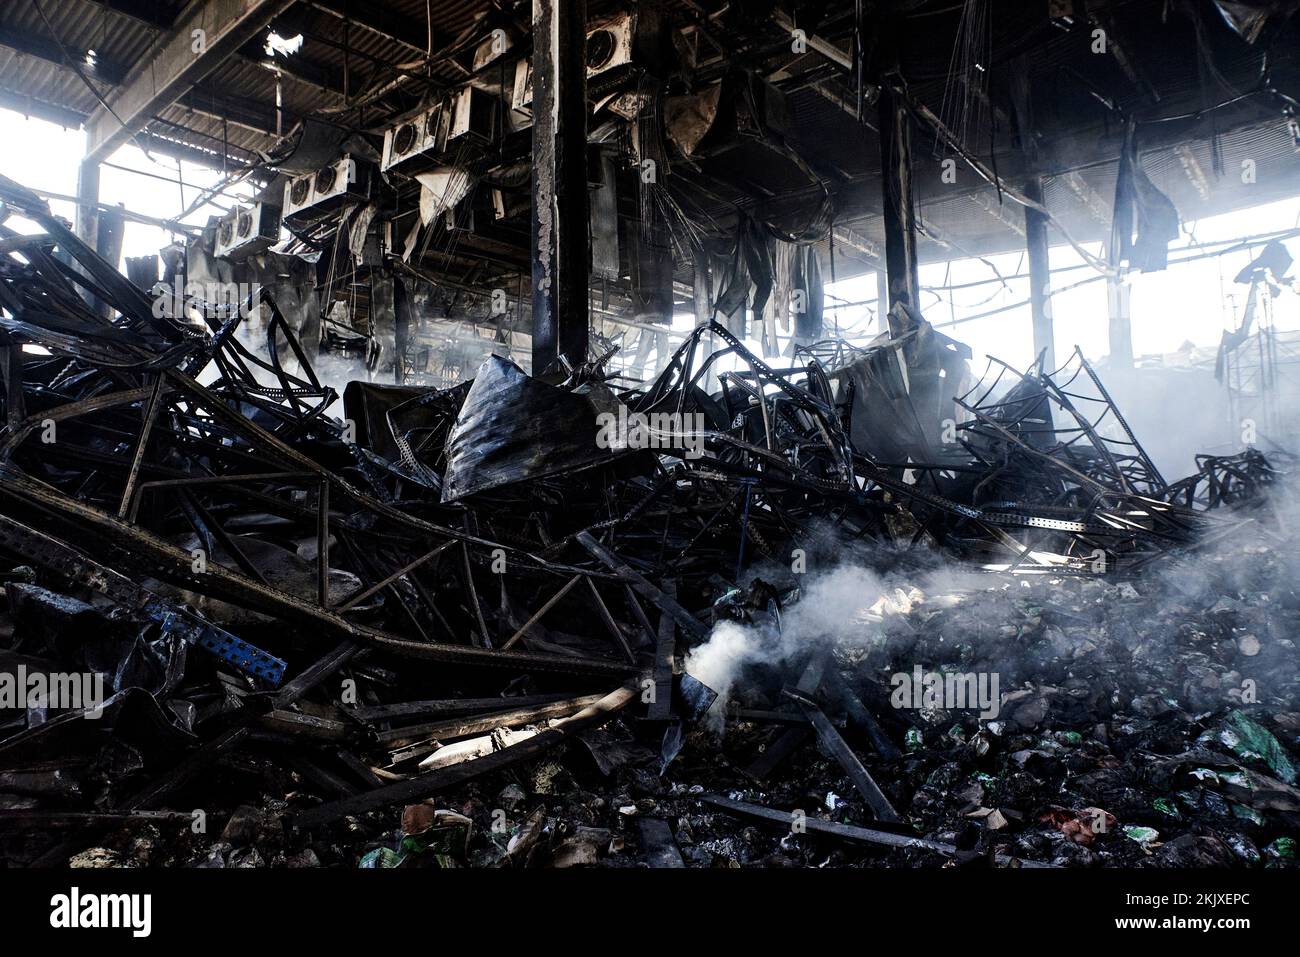 Antonin Burat / Le Pictorium -  War in Ukraine: David stands up to Goliath -  29/3/2022  -  Ukraine / Kyiv  -  Inside the smoking ruins of a warehouse Stock Photo